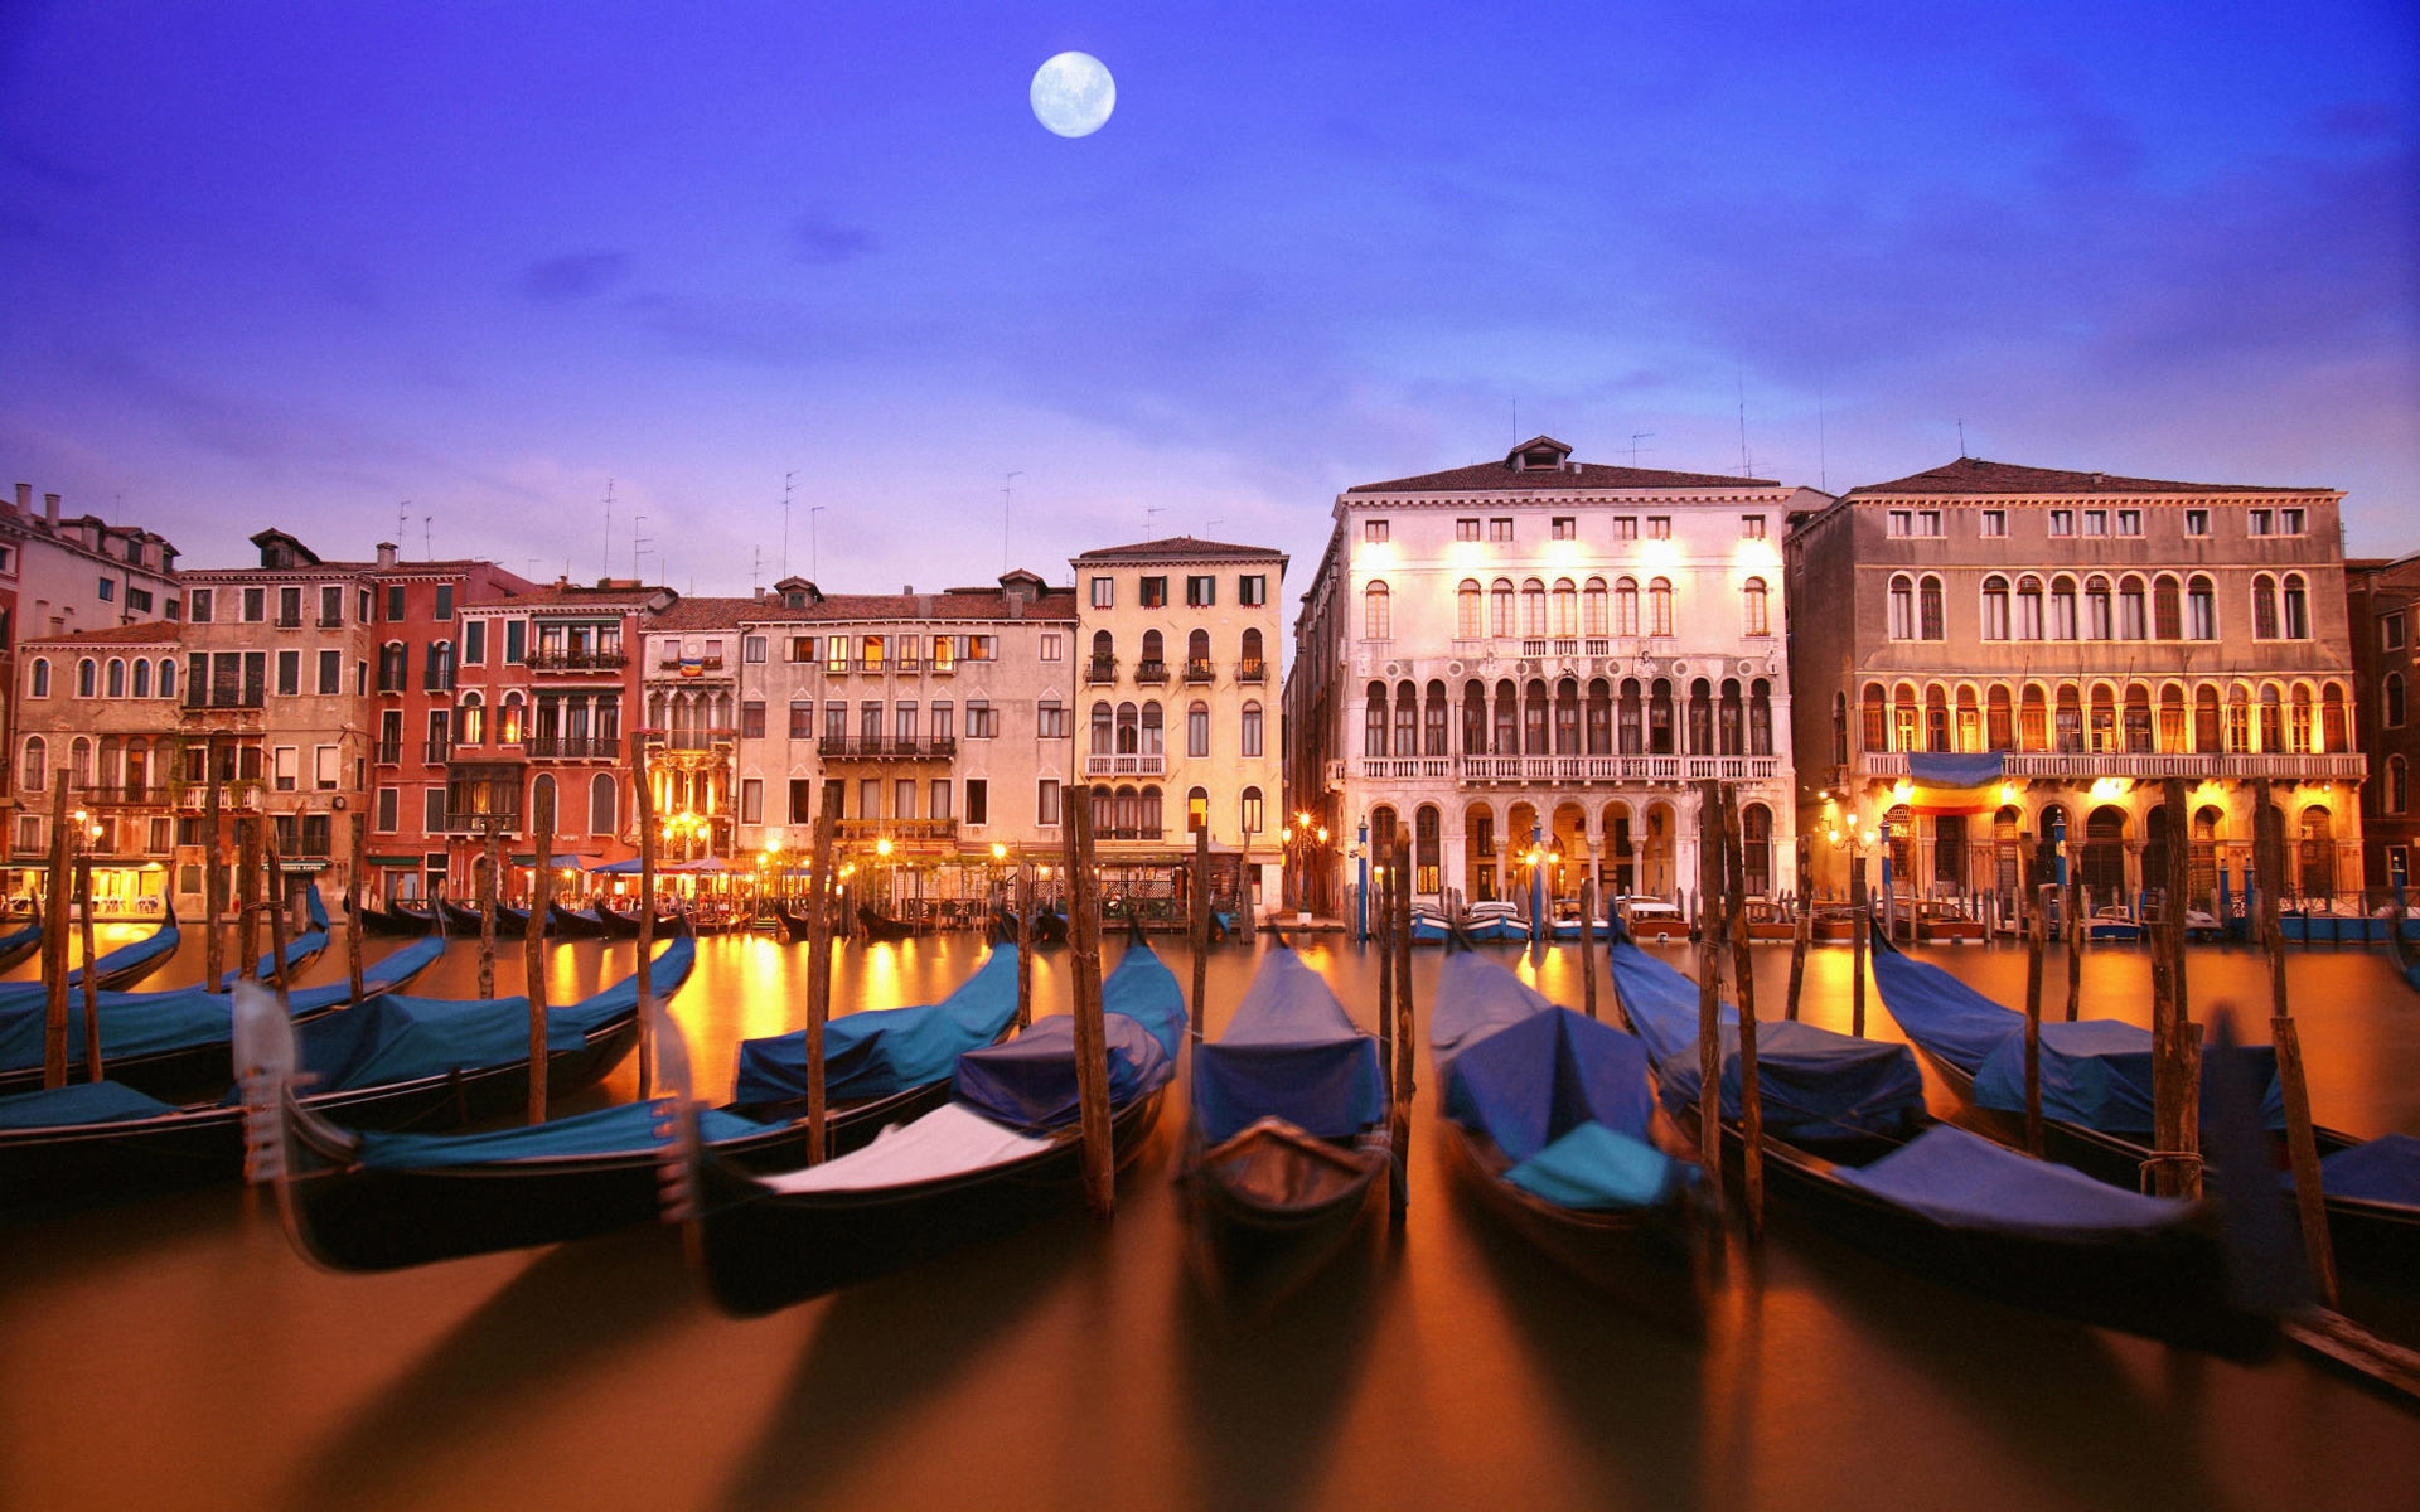 Город на реке в италии. Гранд-канал. Венеция. Italy Венеция. Canal grande Венеция. Ночная Венеция Италия.